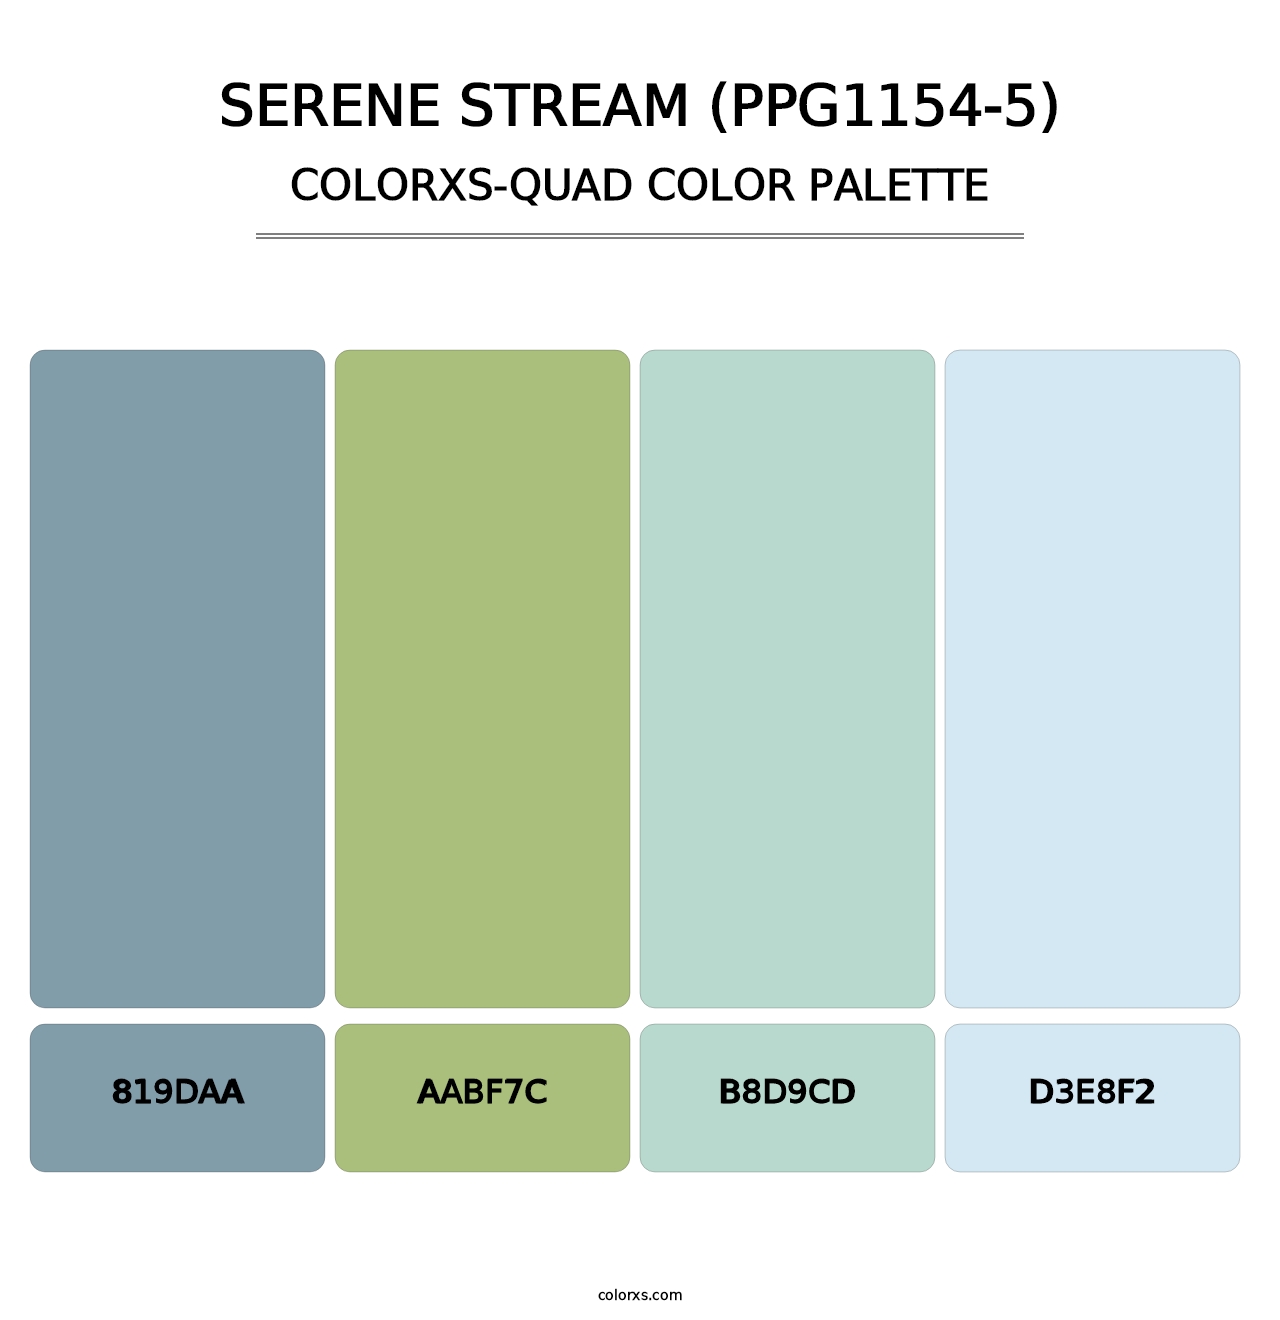 Serene Stream (PPG1154-5) - Colorxs Quad Palette